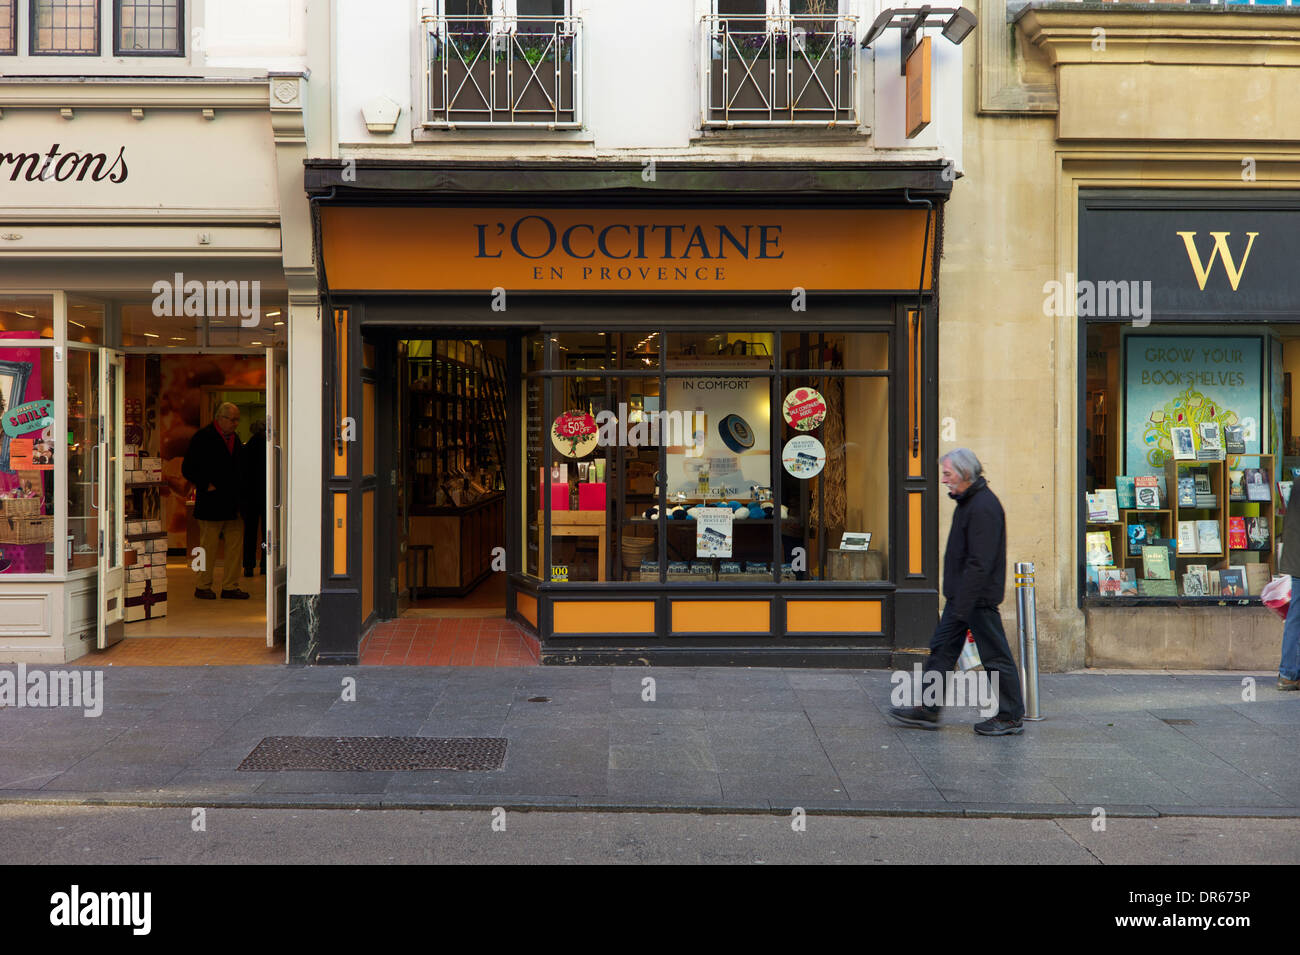 L'Occitane de Provence shop, UK Stock Photo